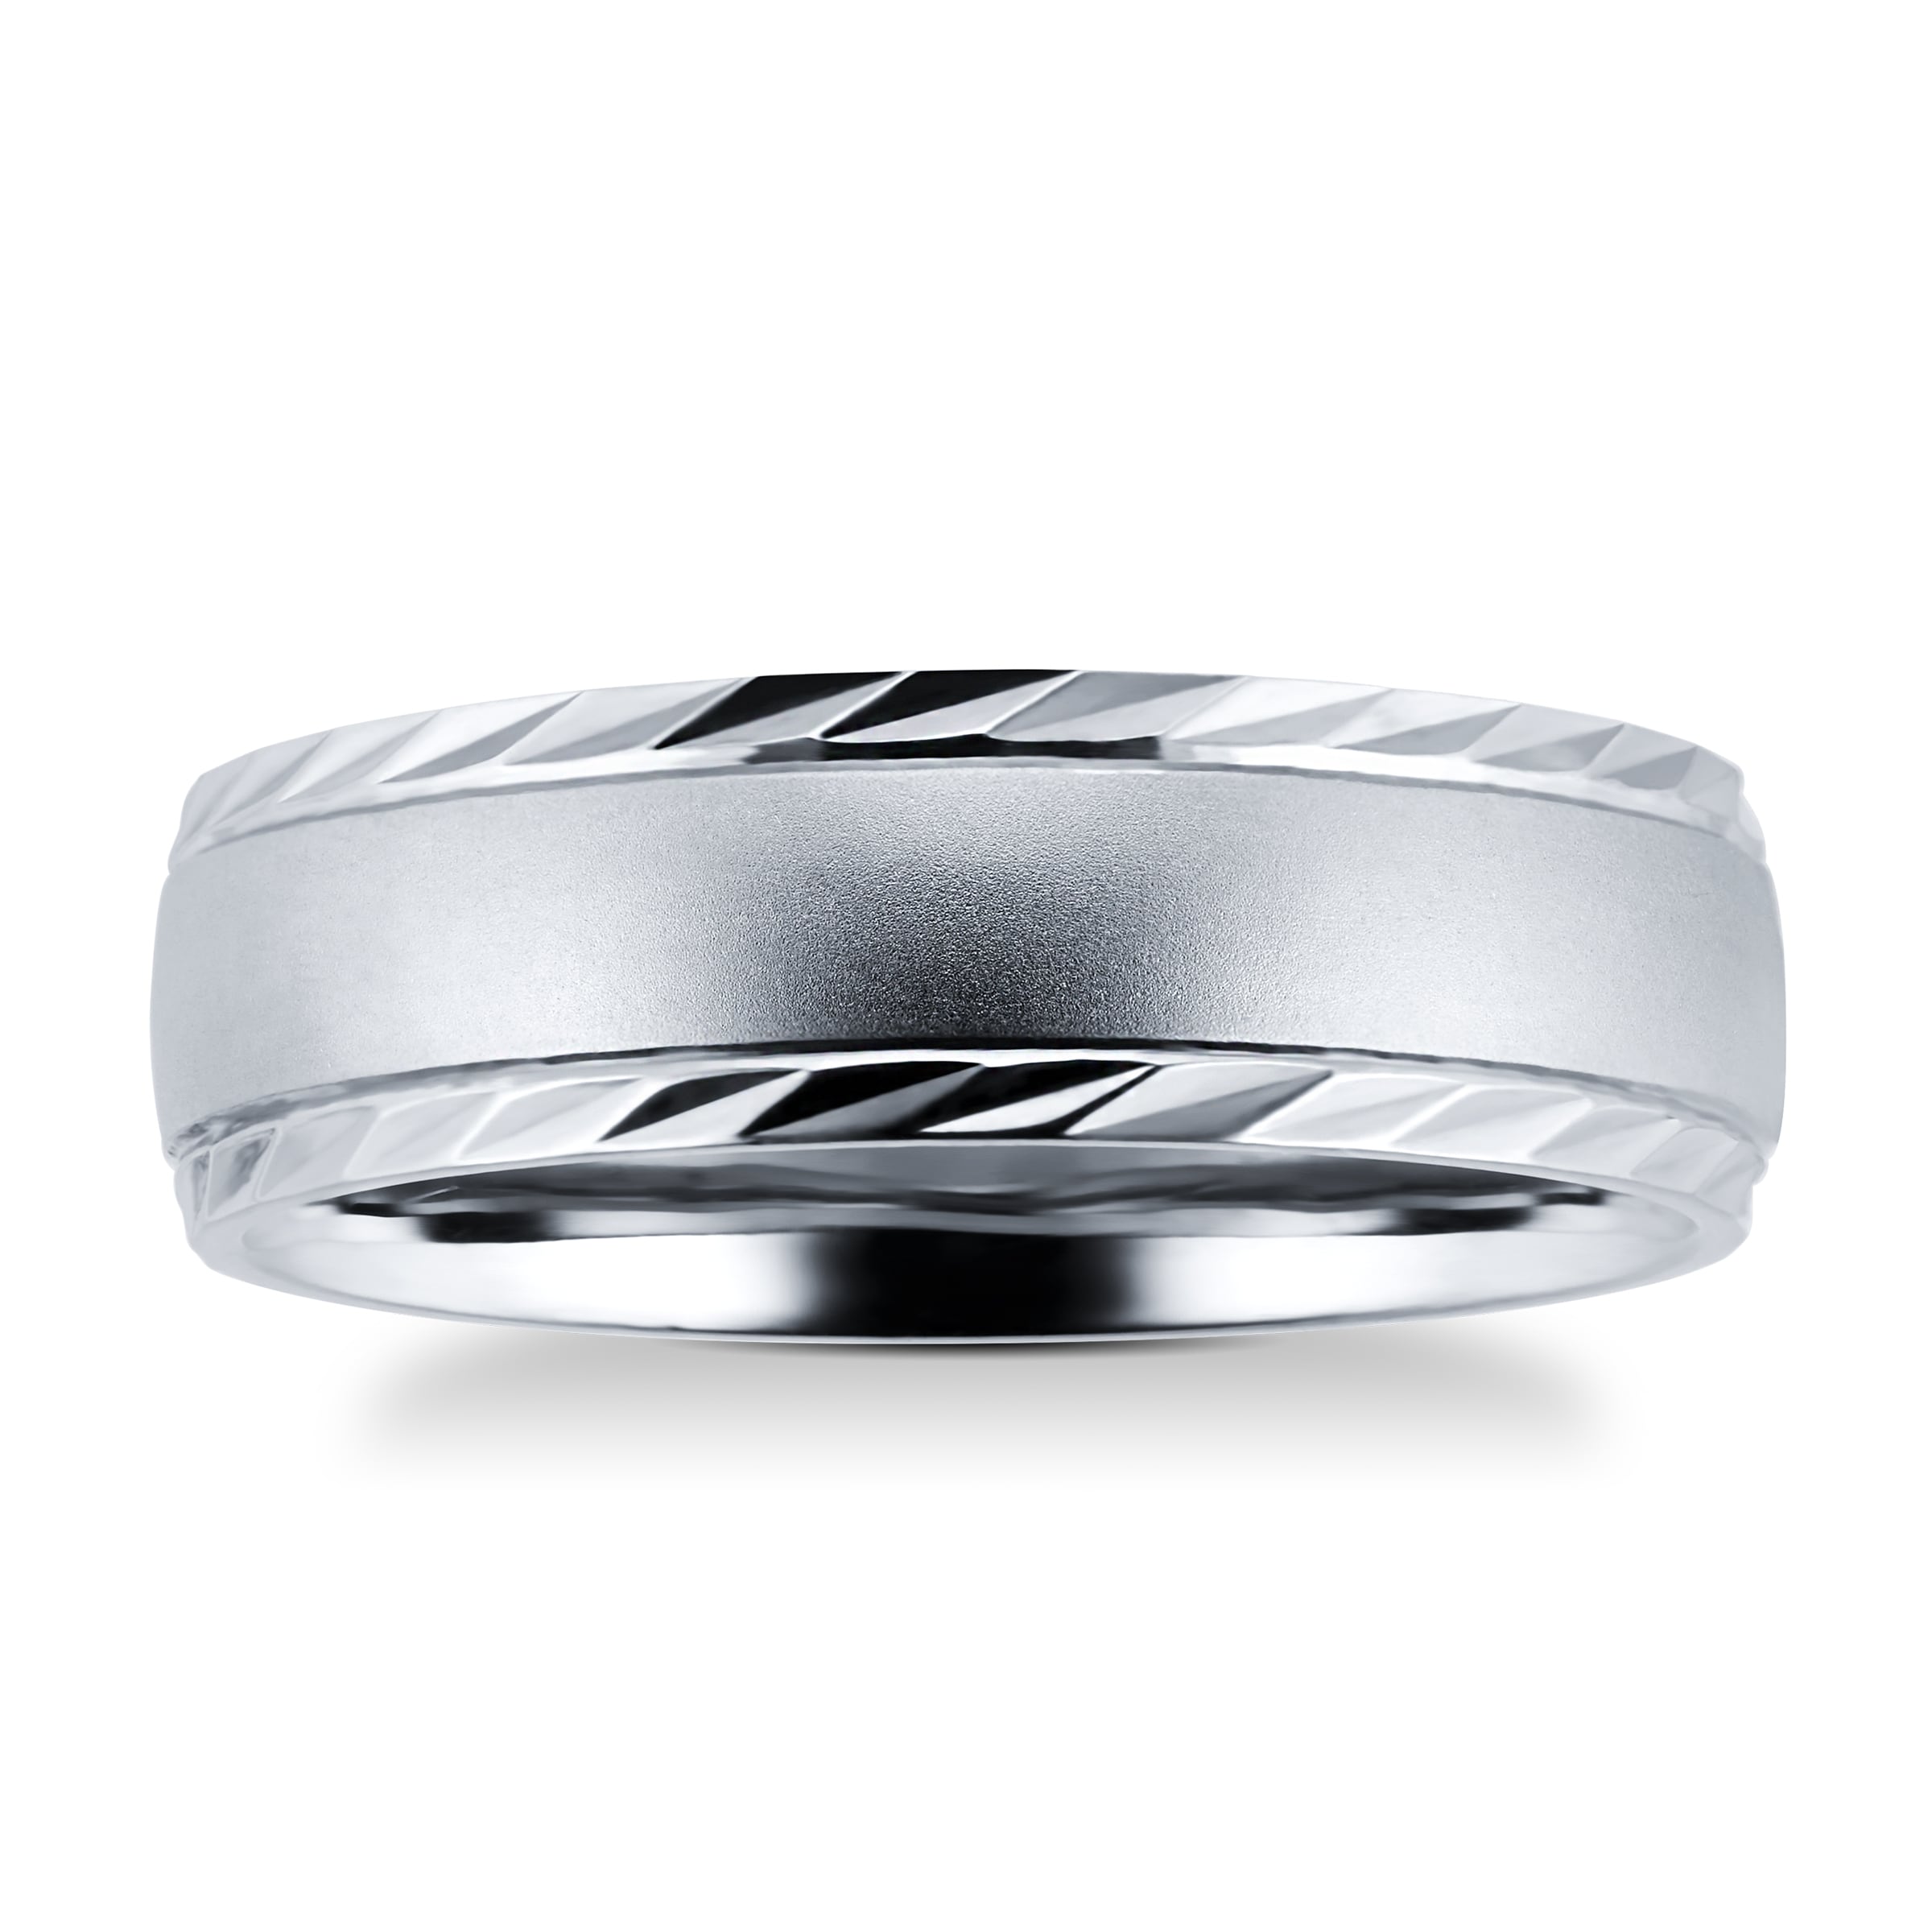 Palladium 500 6mm Fancy Gents Ring - Ring Size S